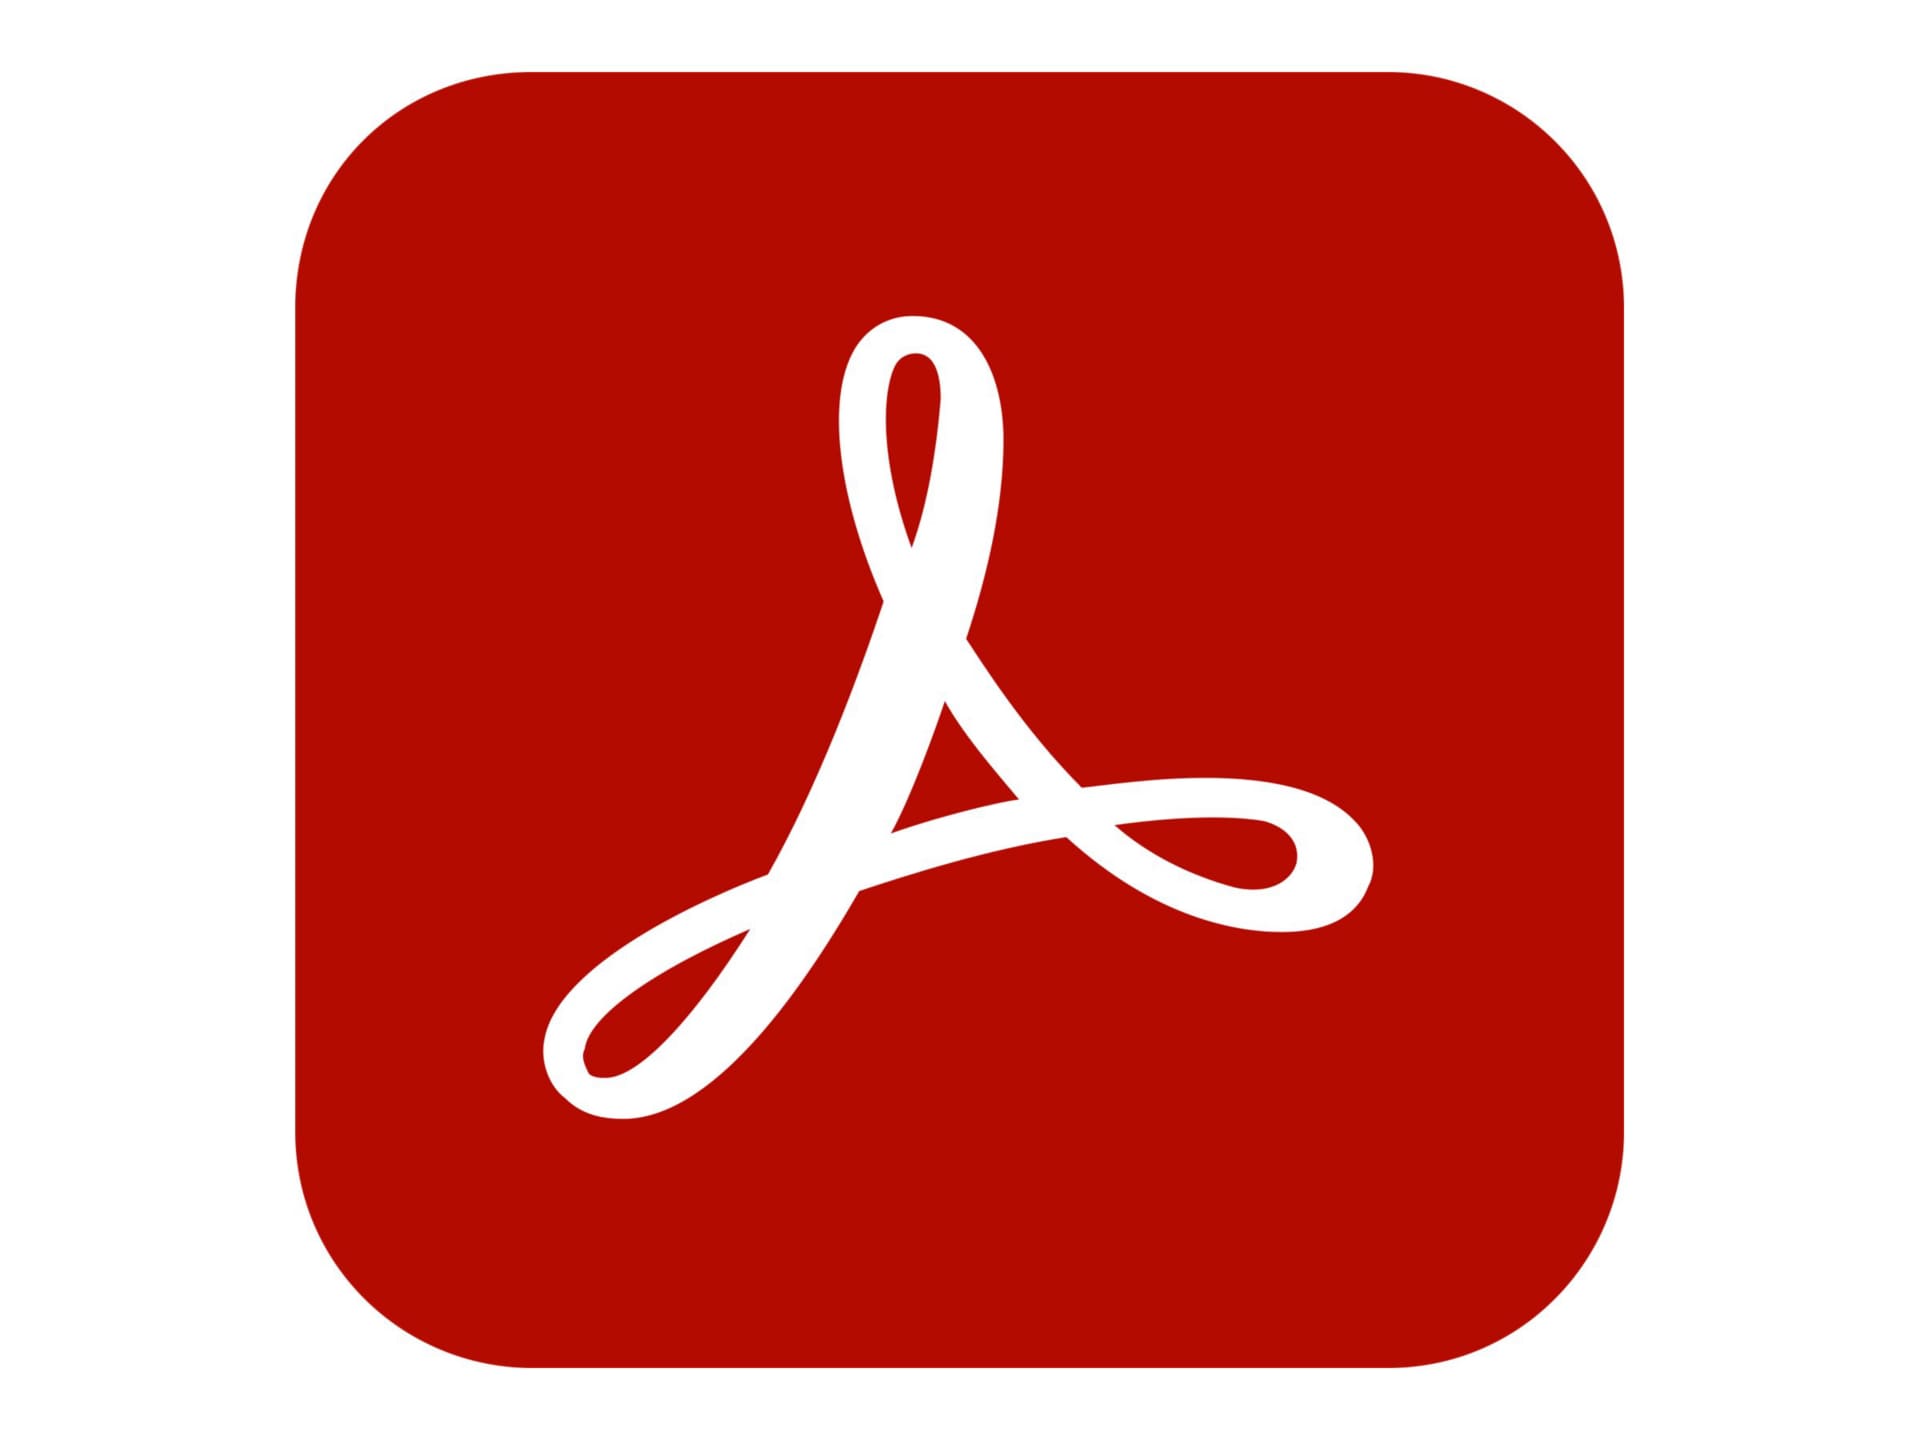 Adobe Acrobat Pro DC for Enterprise - Subscription New (15 months) - 1 named user